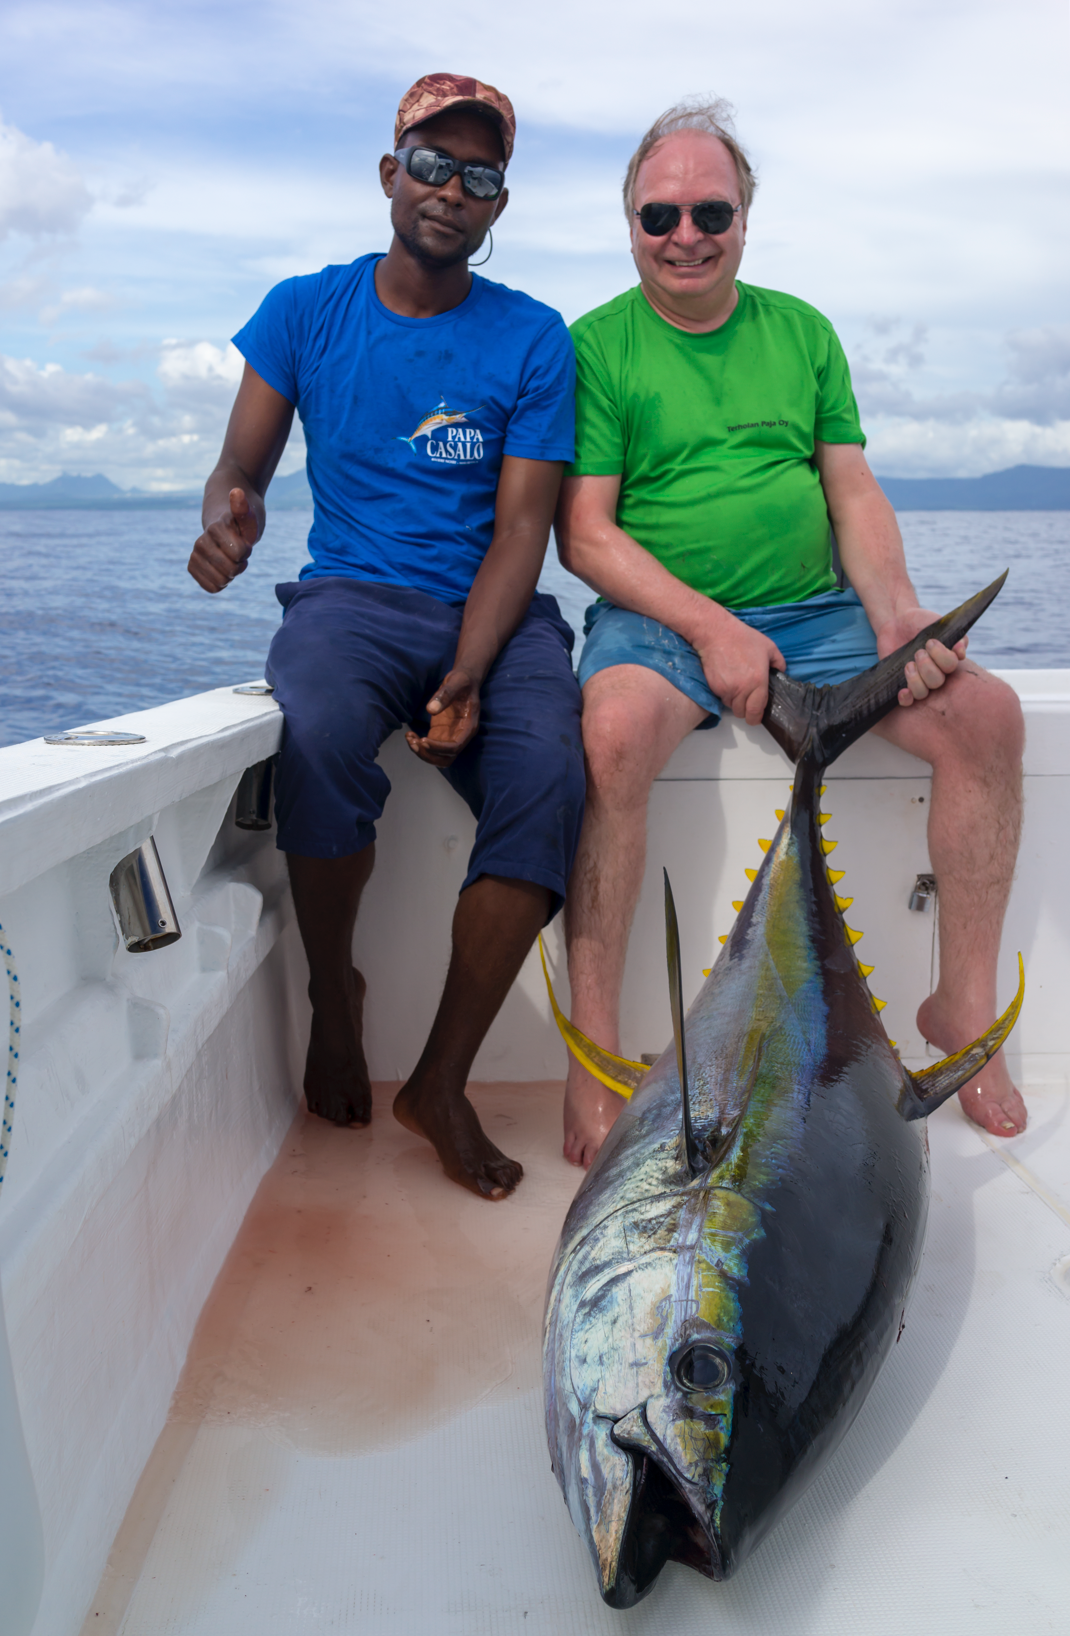 130 lbs yellowfin tuna is a really good catch.